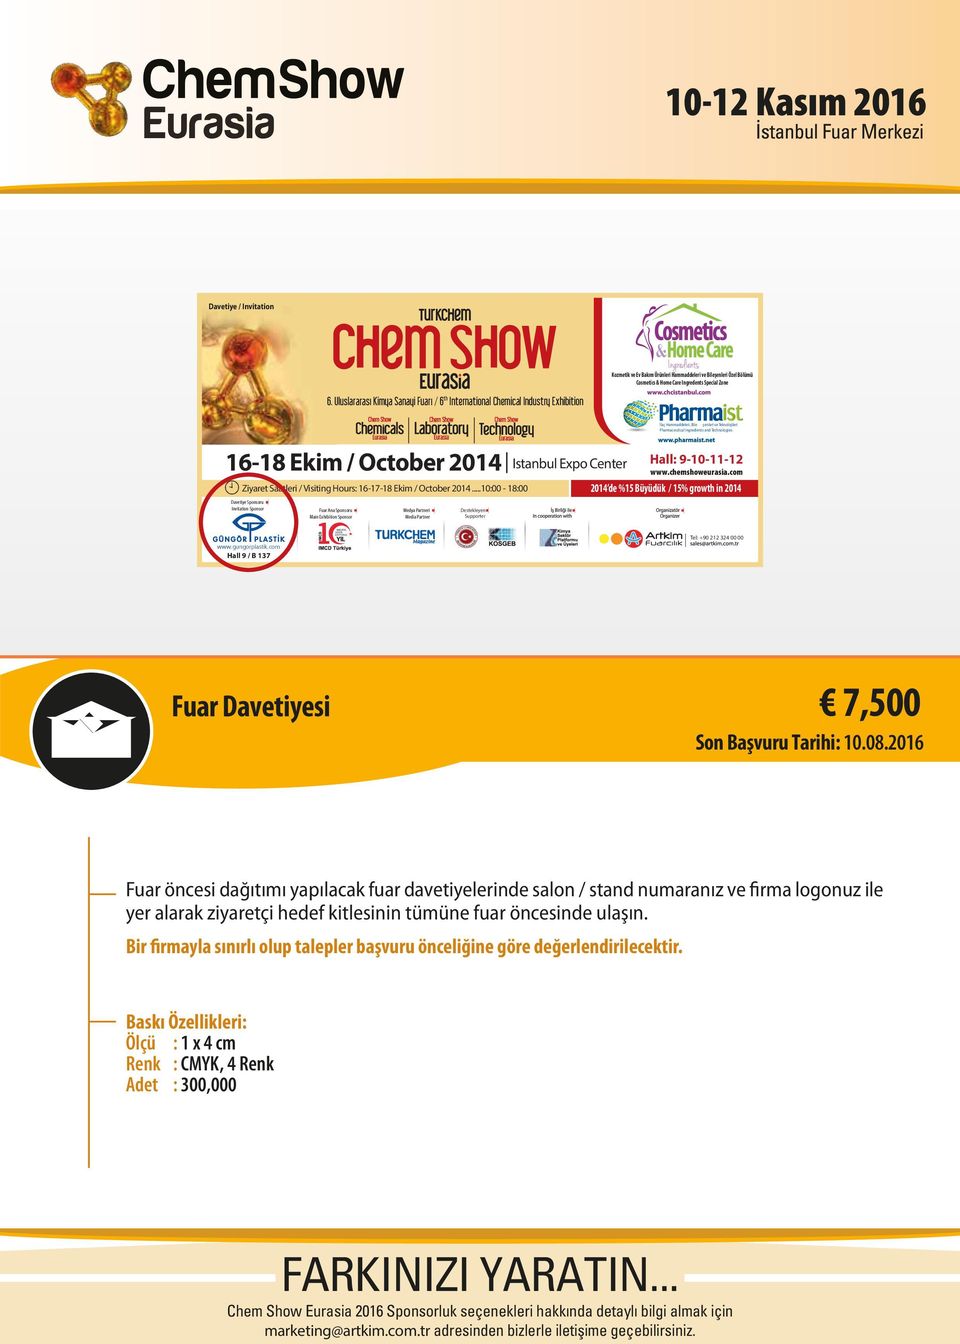 2014 Istanbul Expo Center www.chemshoweurasia.com Ziyaret Saatleri / Visiting Hours: 16-17-18 Ekim / October 2014.